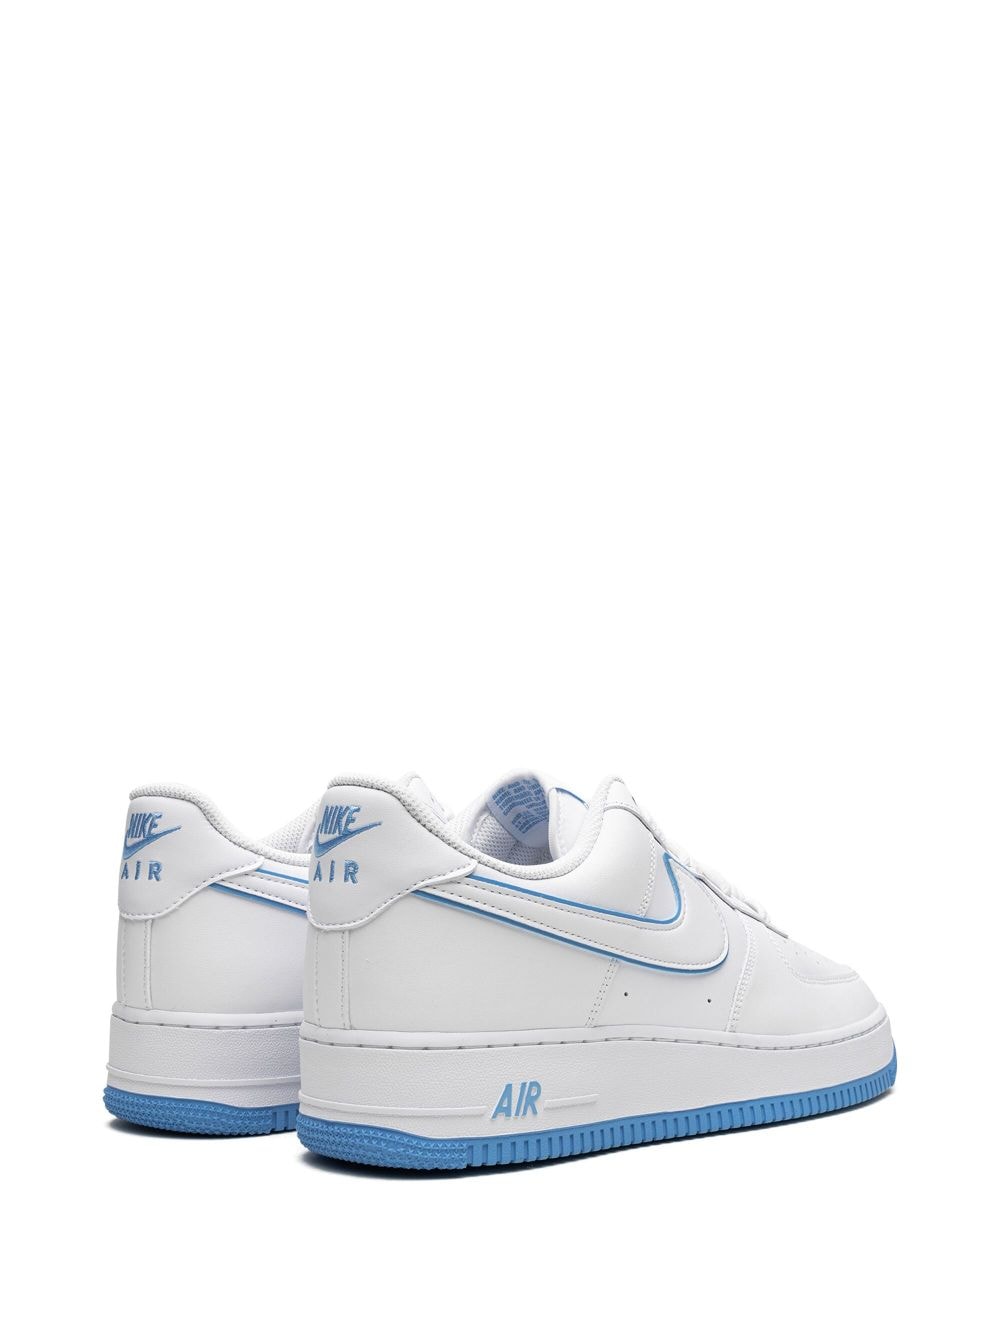 Nike Air Force 1 '07 (White/University Blue) 12